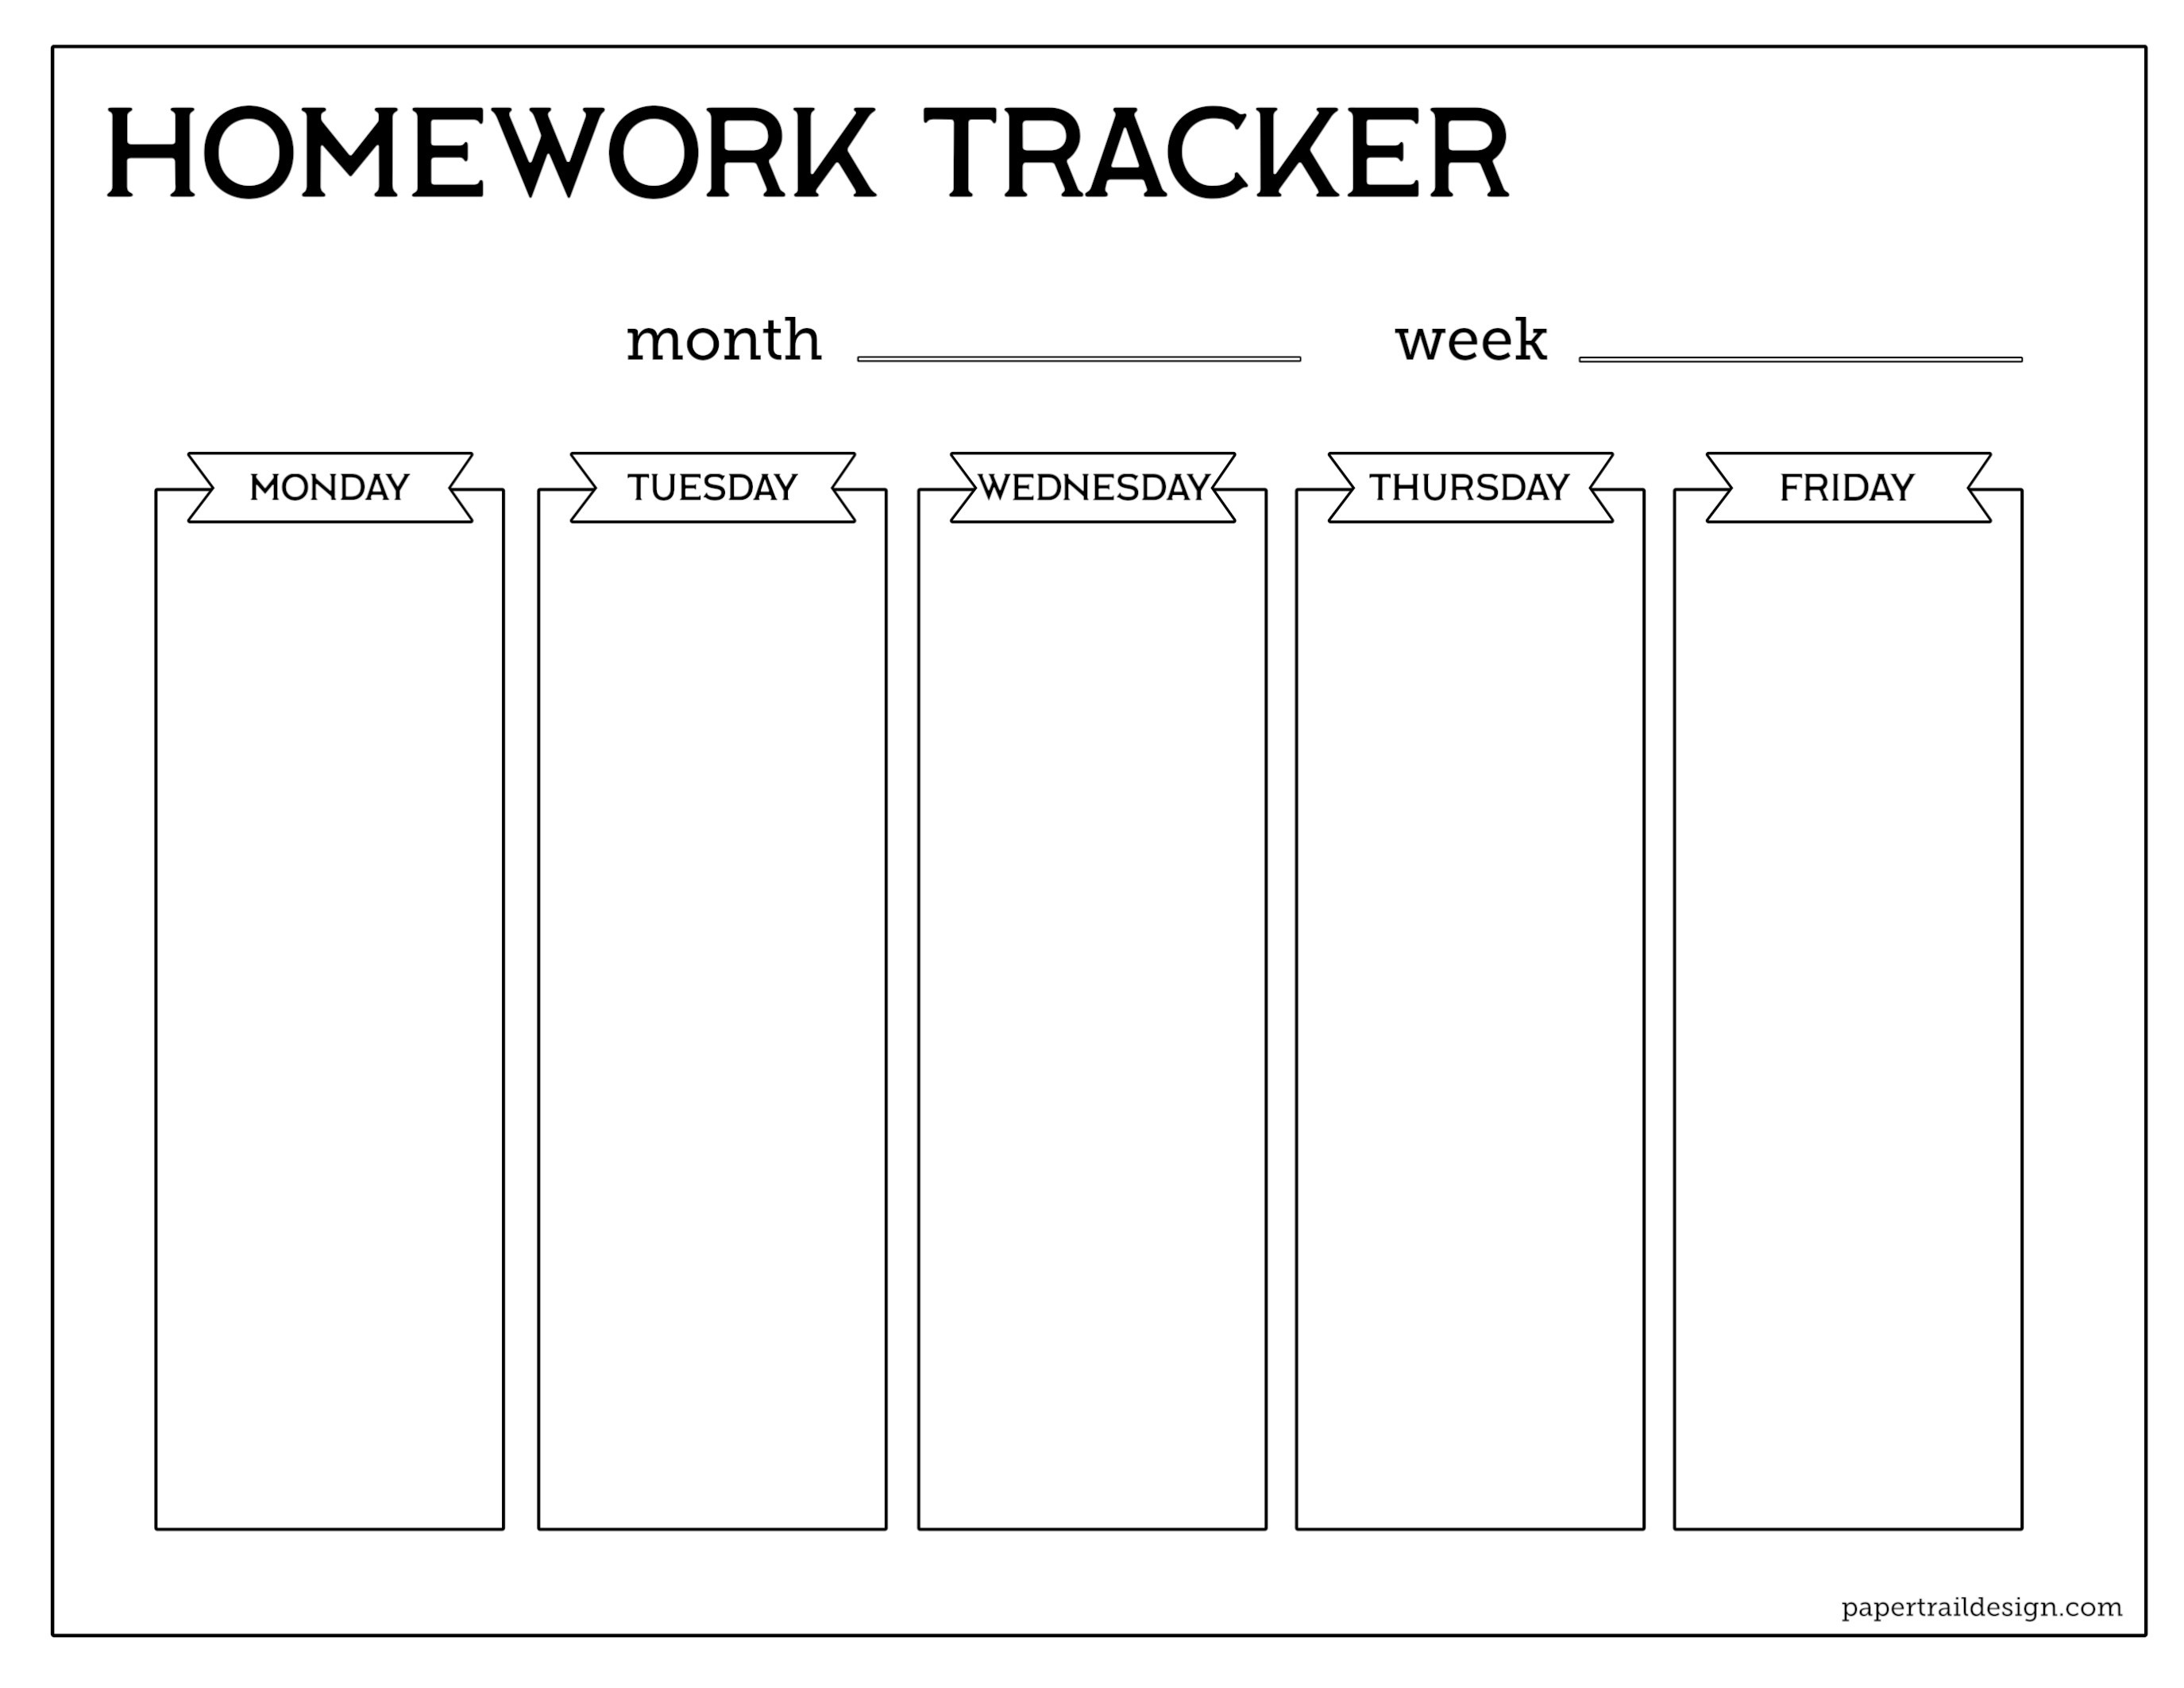 Free Printable Student Homework Planner Template - Paper Trail Design - Free Printable Homework Templates